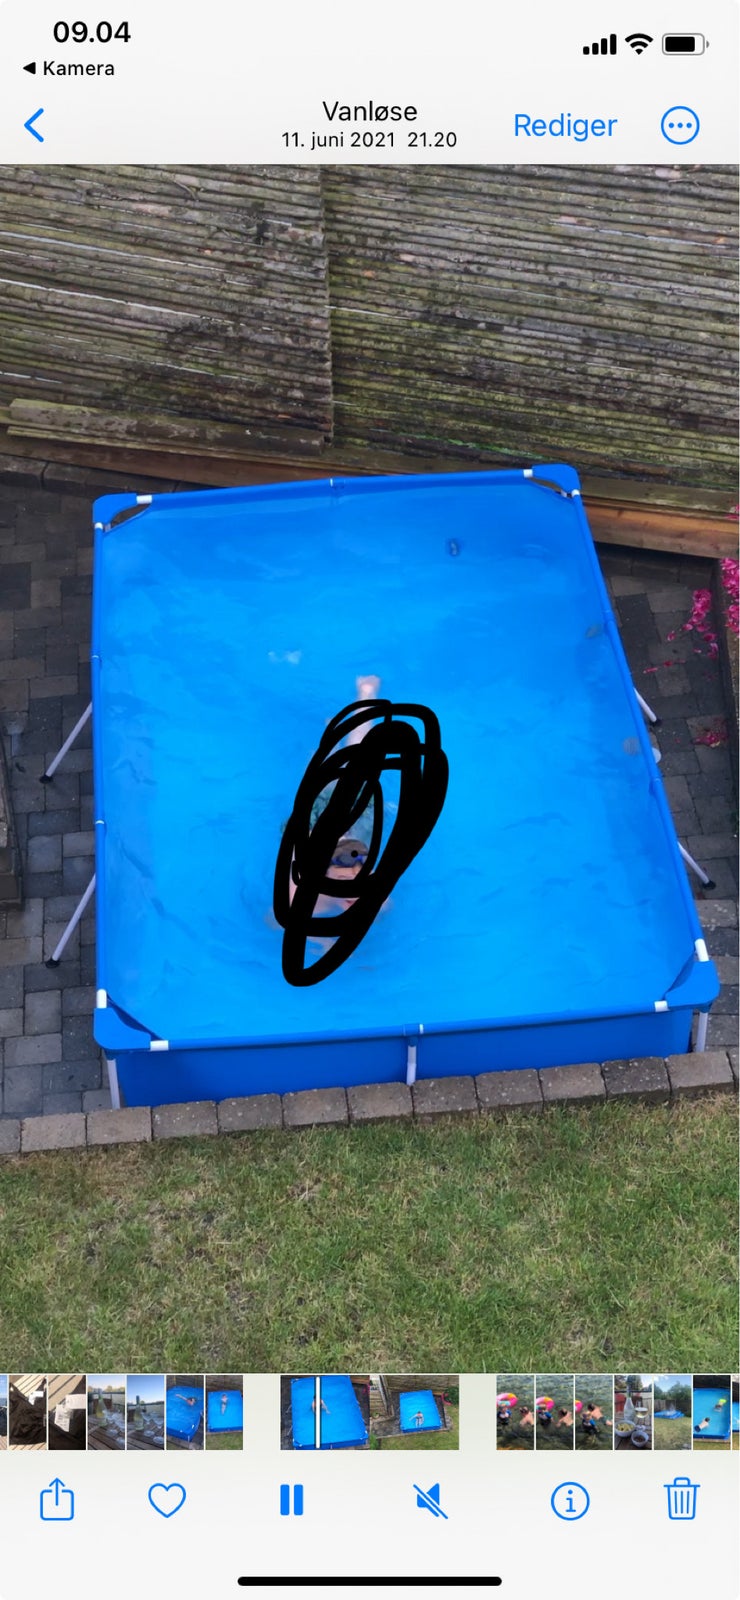 Større have pool